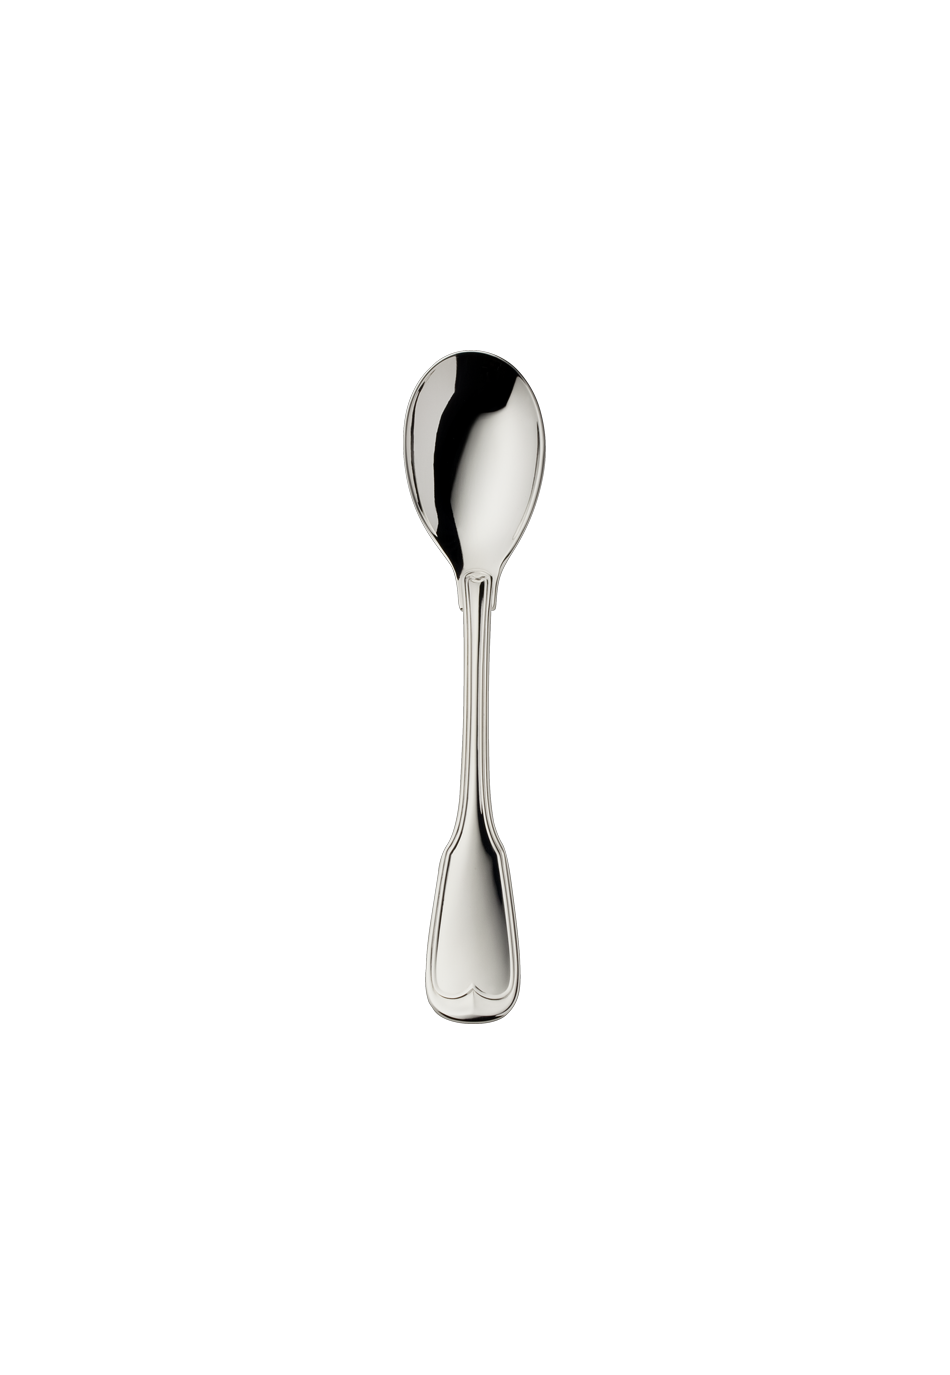 Alt-Faden Ice-Cream Spoon (150g massive silverplated)